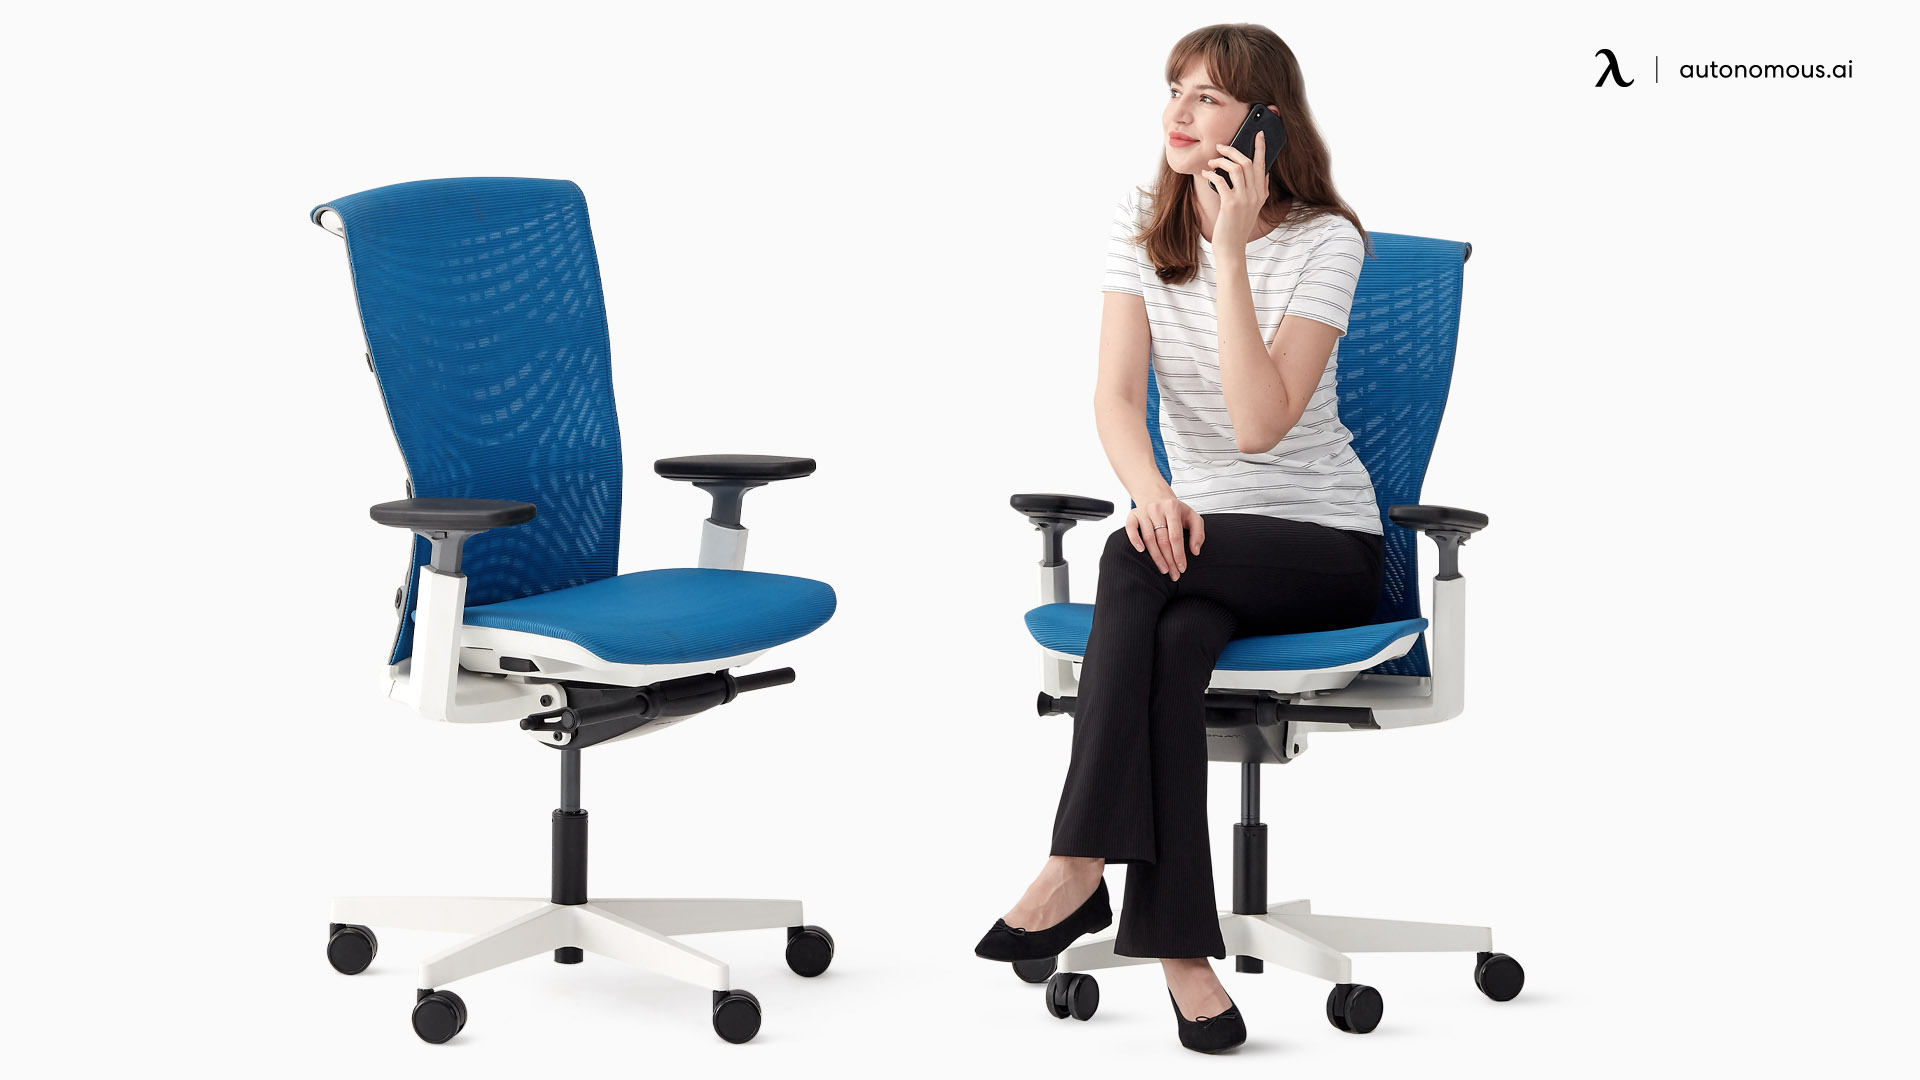 ErgoChair Plus colorful office chair